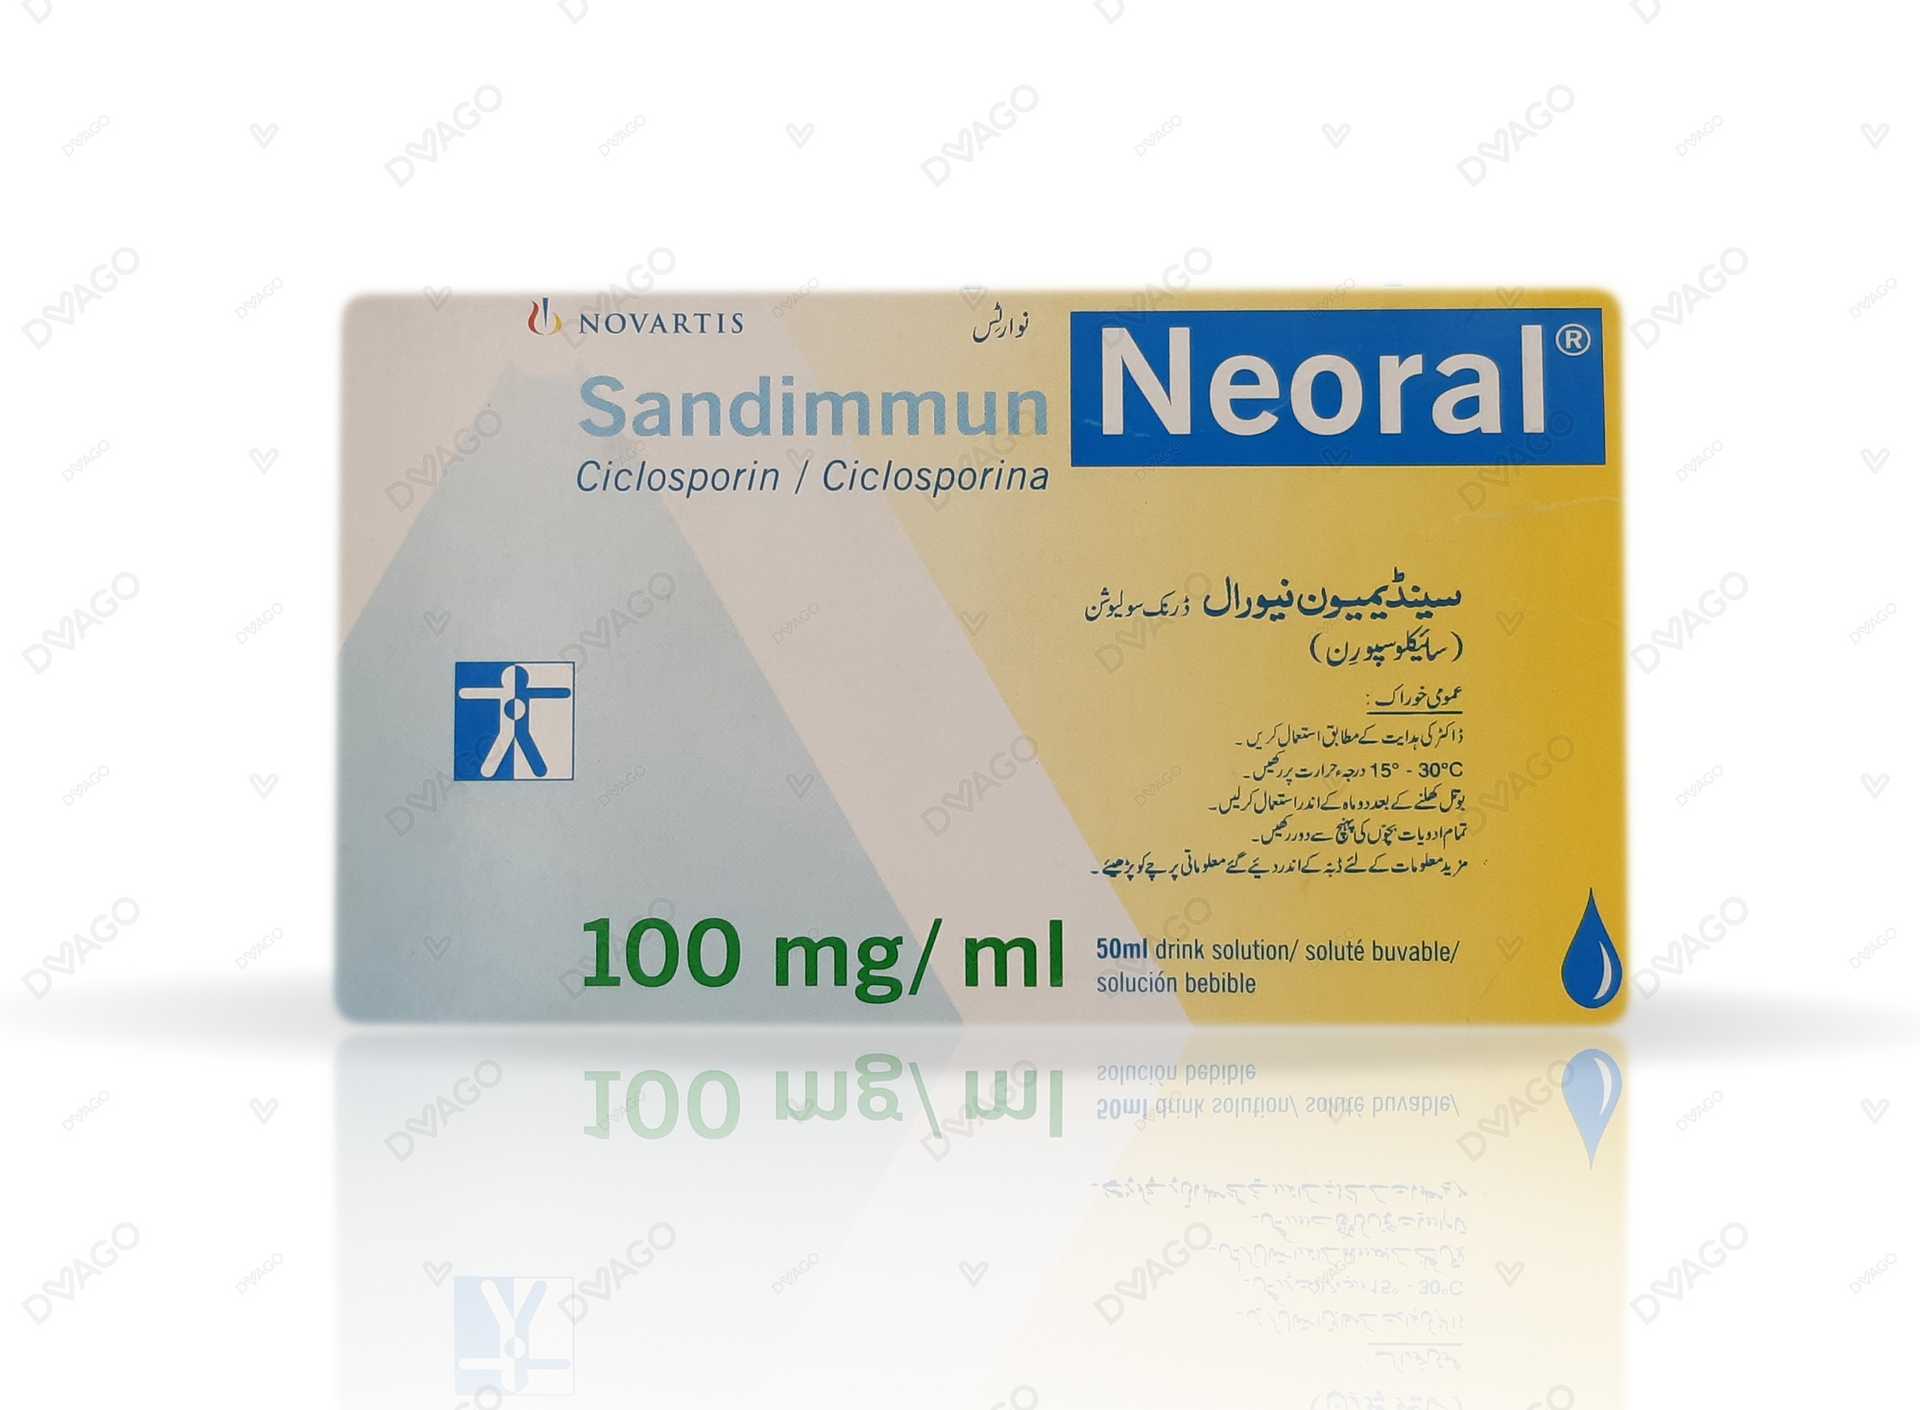 sandimmun neoral 50ml oral solution 100mg/ml